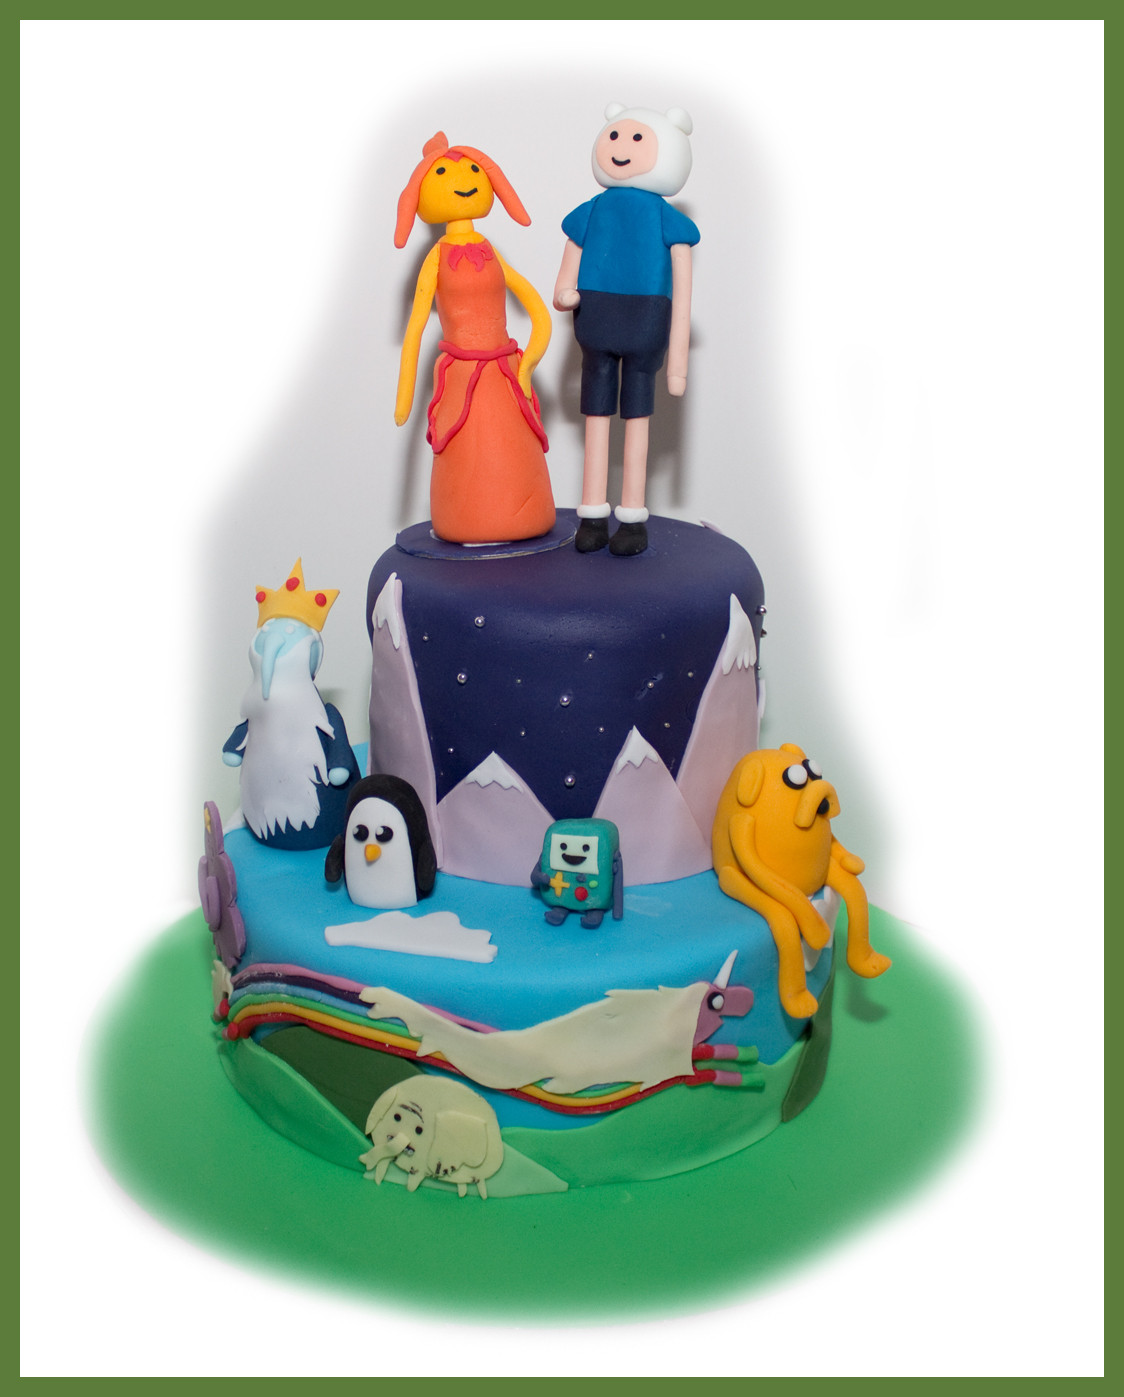 Adventure Time Birthday Cake
 Bake It So Adventure Time cake